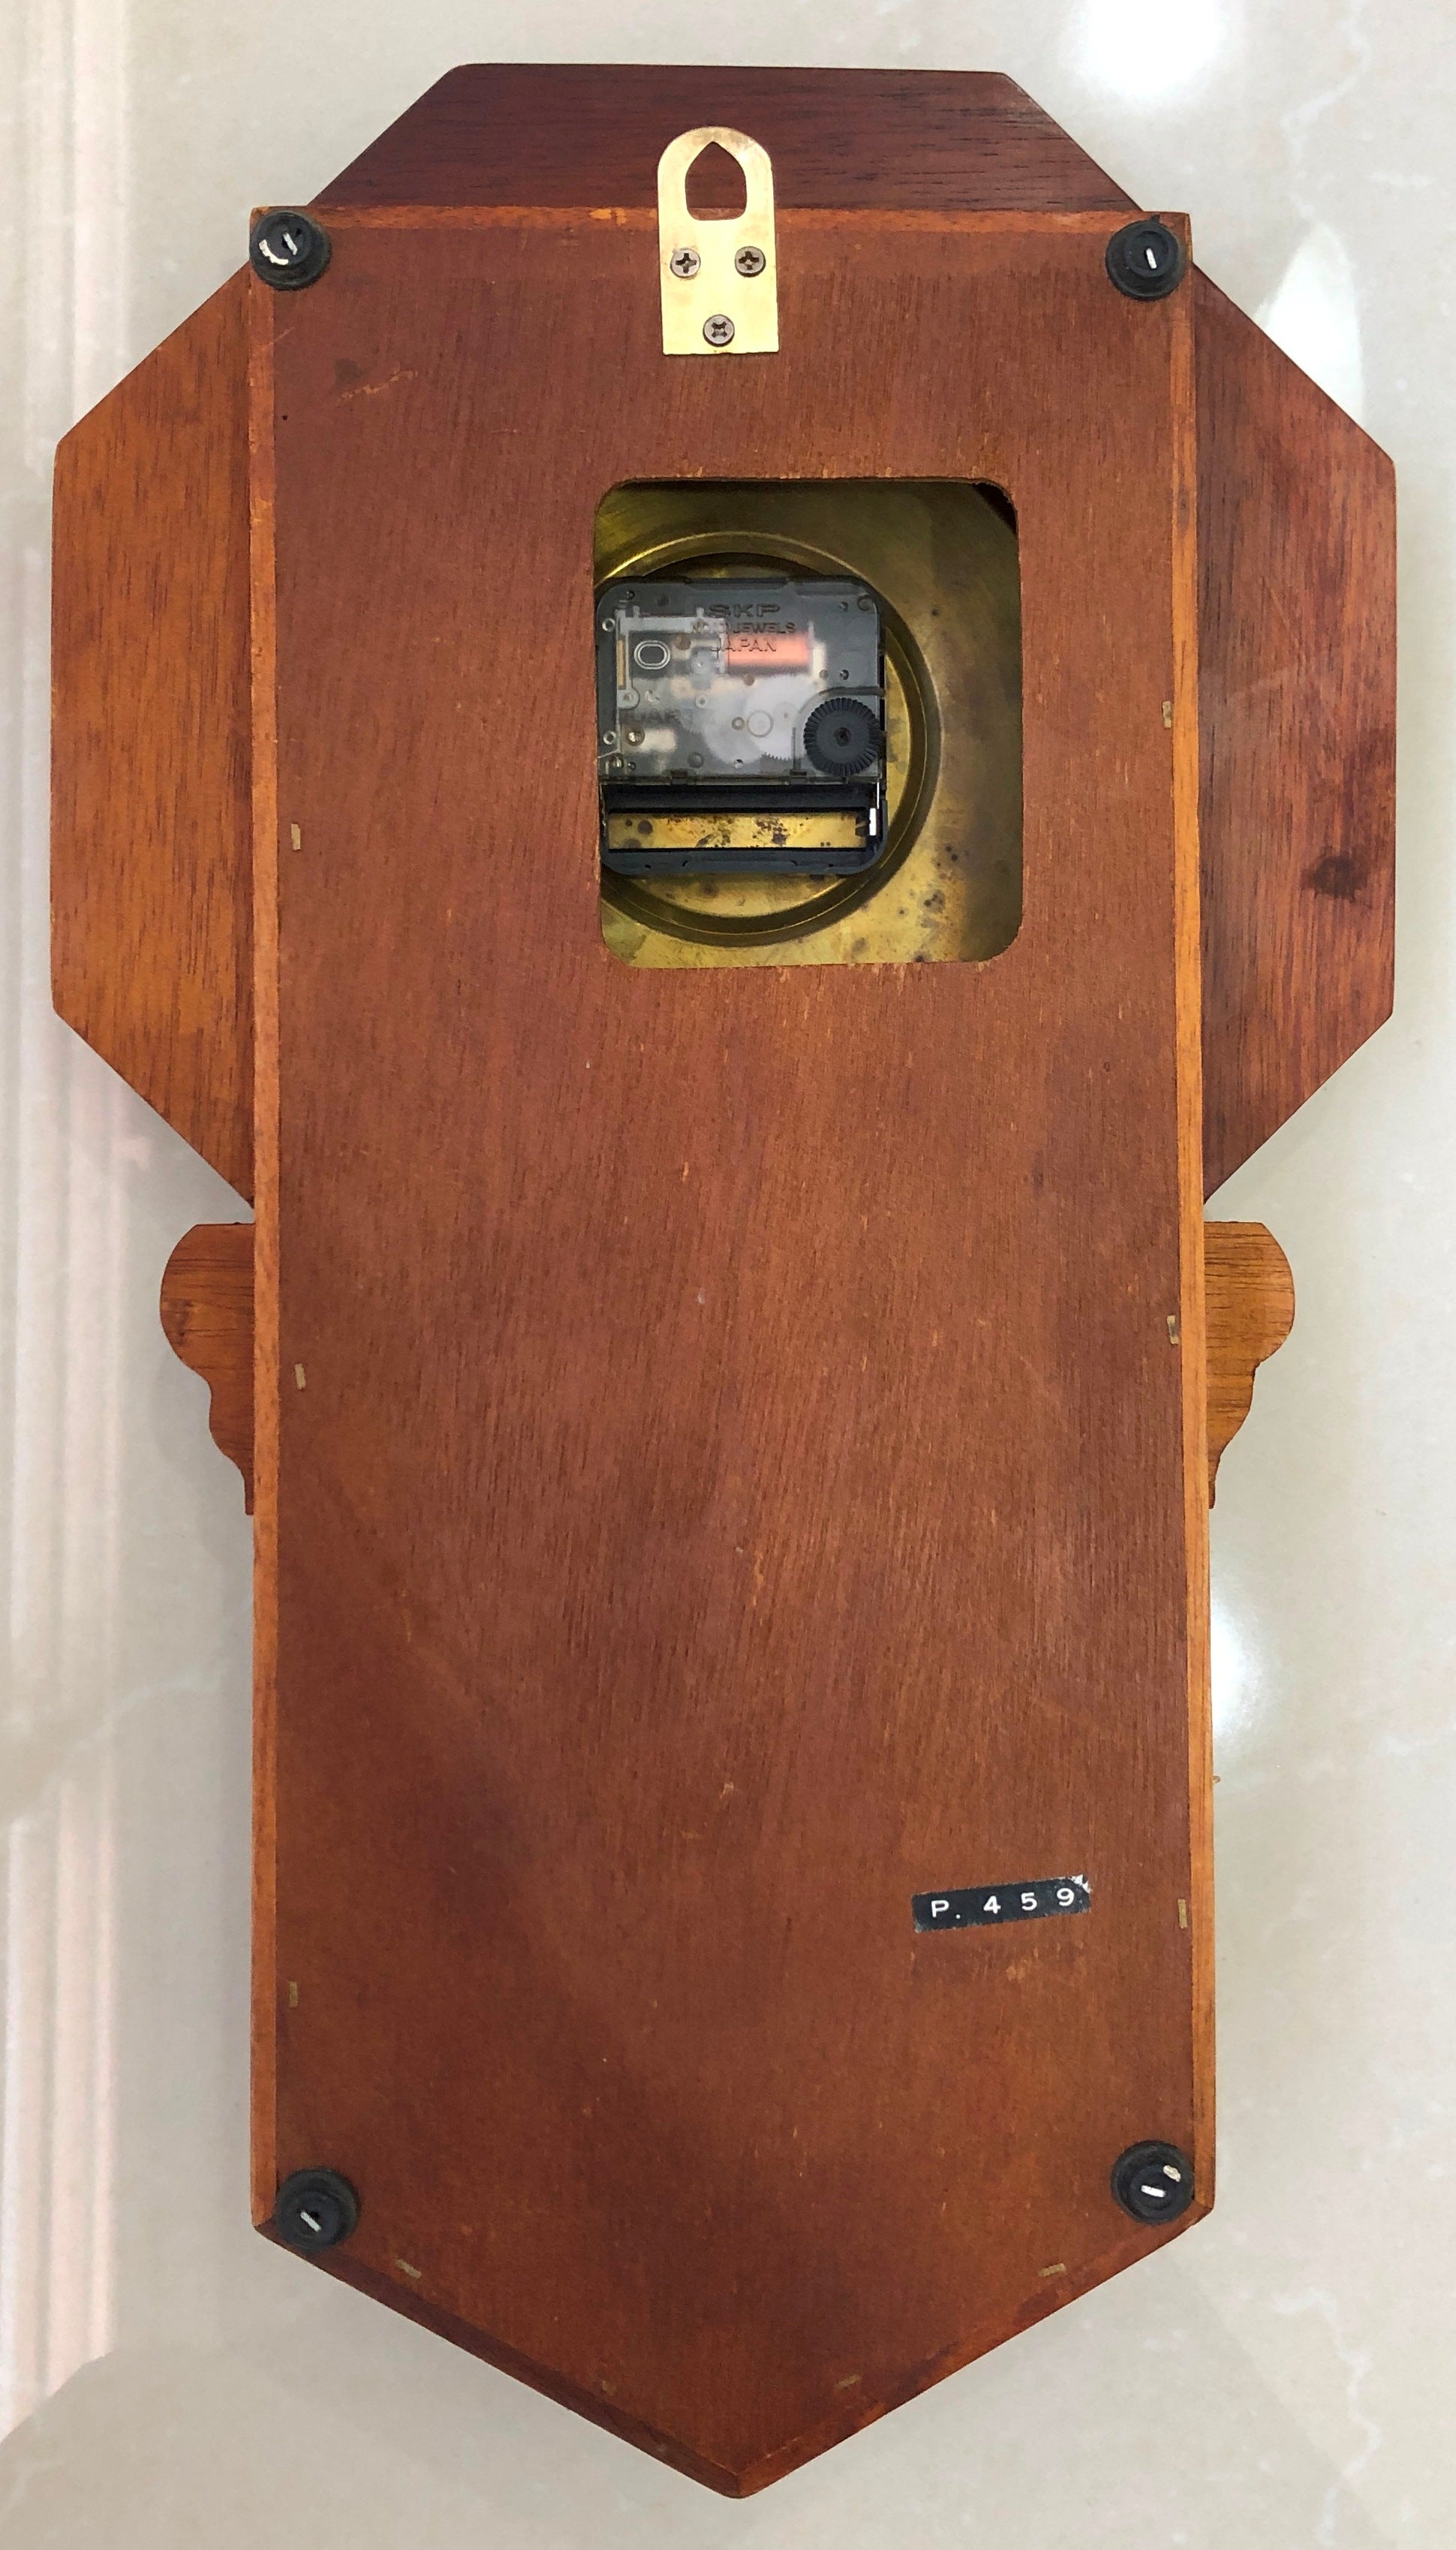 Vintage Regulator Coronet Quartz Wall Clock | eXibit collection